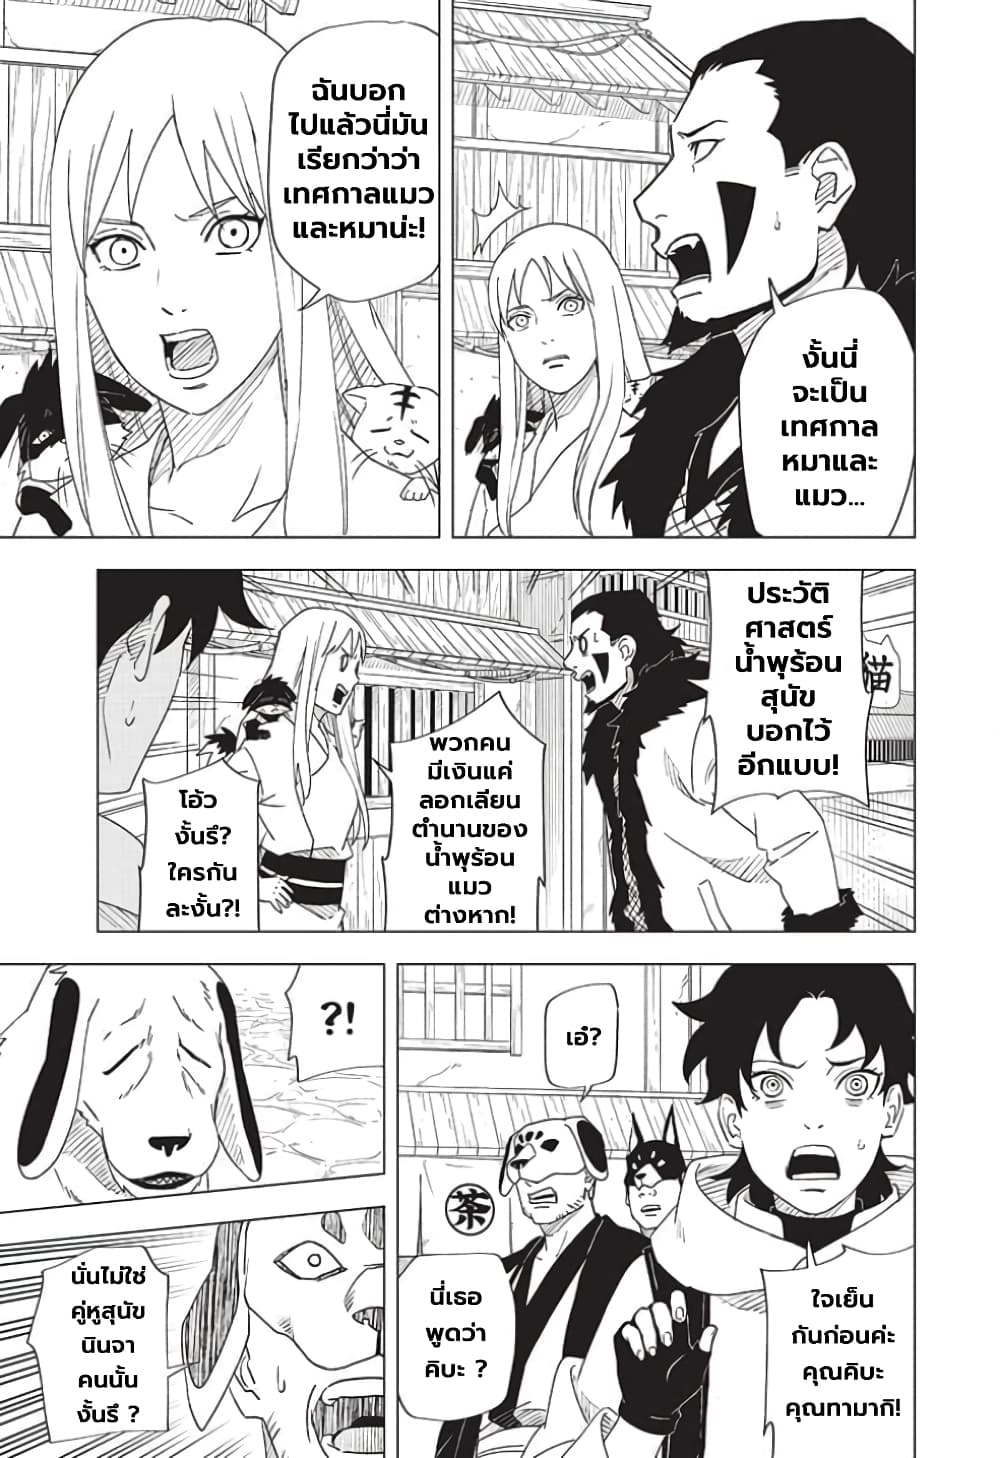 Naruto Konoha’s Story – The Steam Ninja Scrolls The Manga ตอนที่ 5 (3)